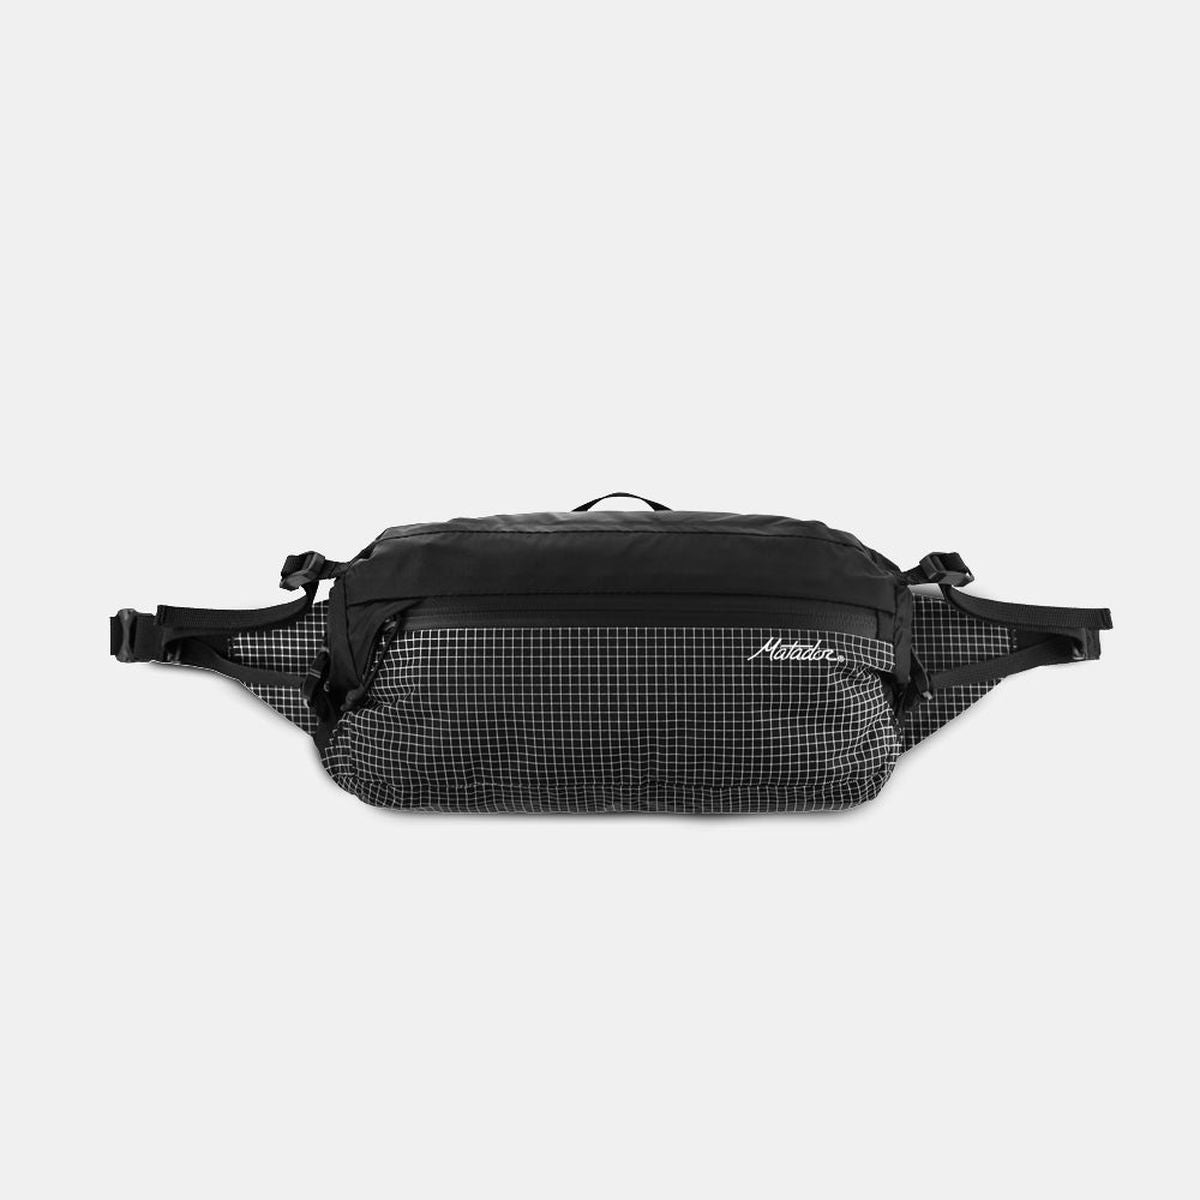 Matador Freerain Waterproof Packable Hip Pack - Black